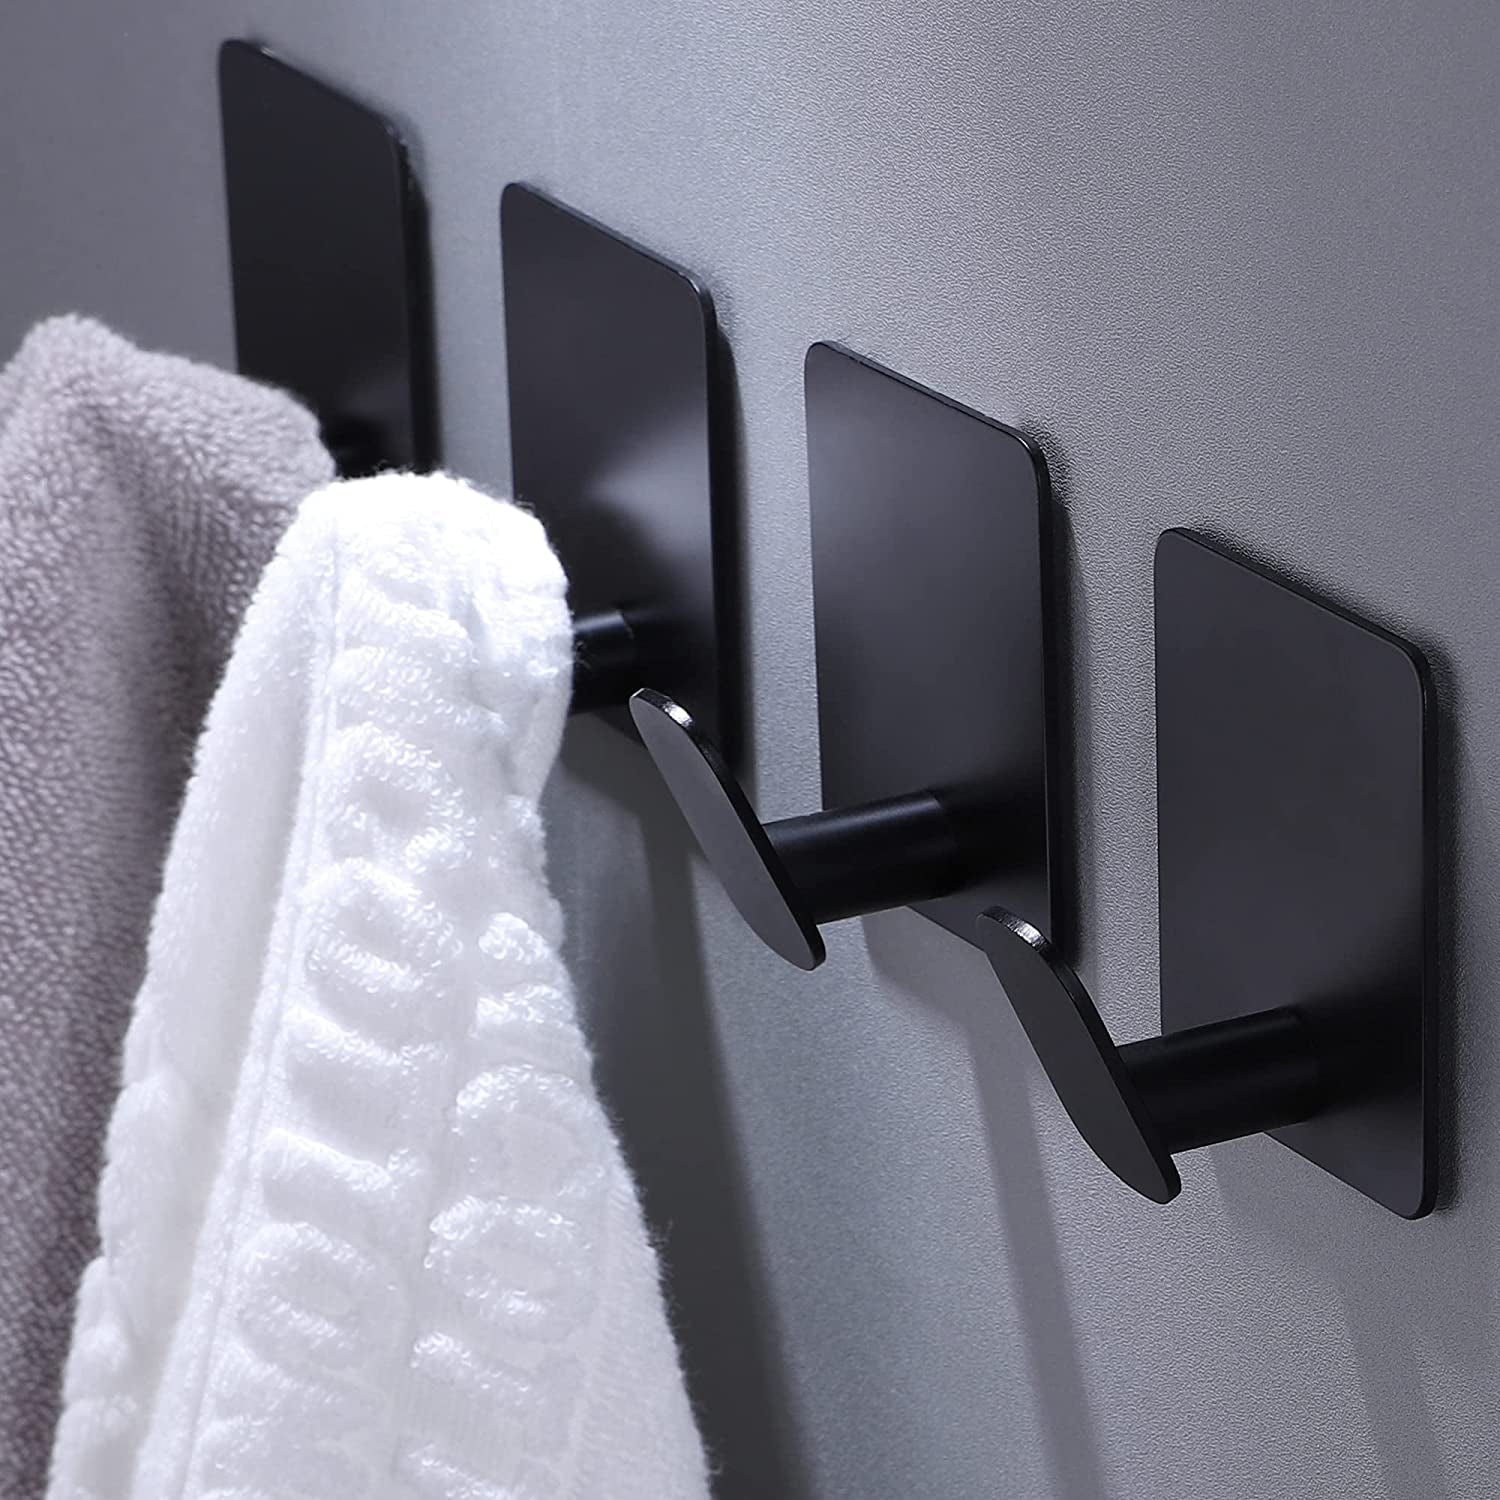 Adhesive Hooks - 4 Pack Towel/Coat Hooks Wall Hooks Stick on Bathroom or Kitchen (Matte Black, Stainless Steel)